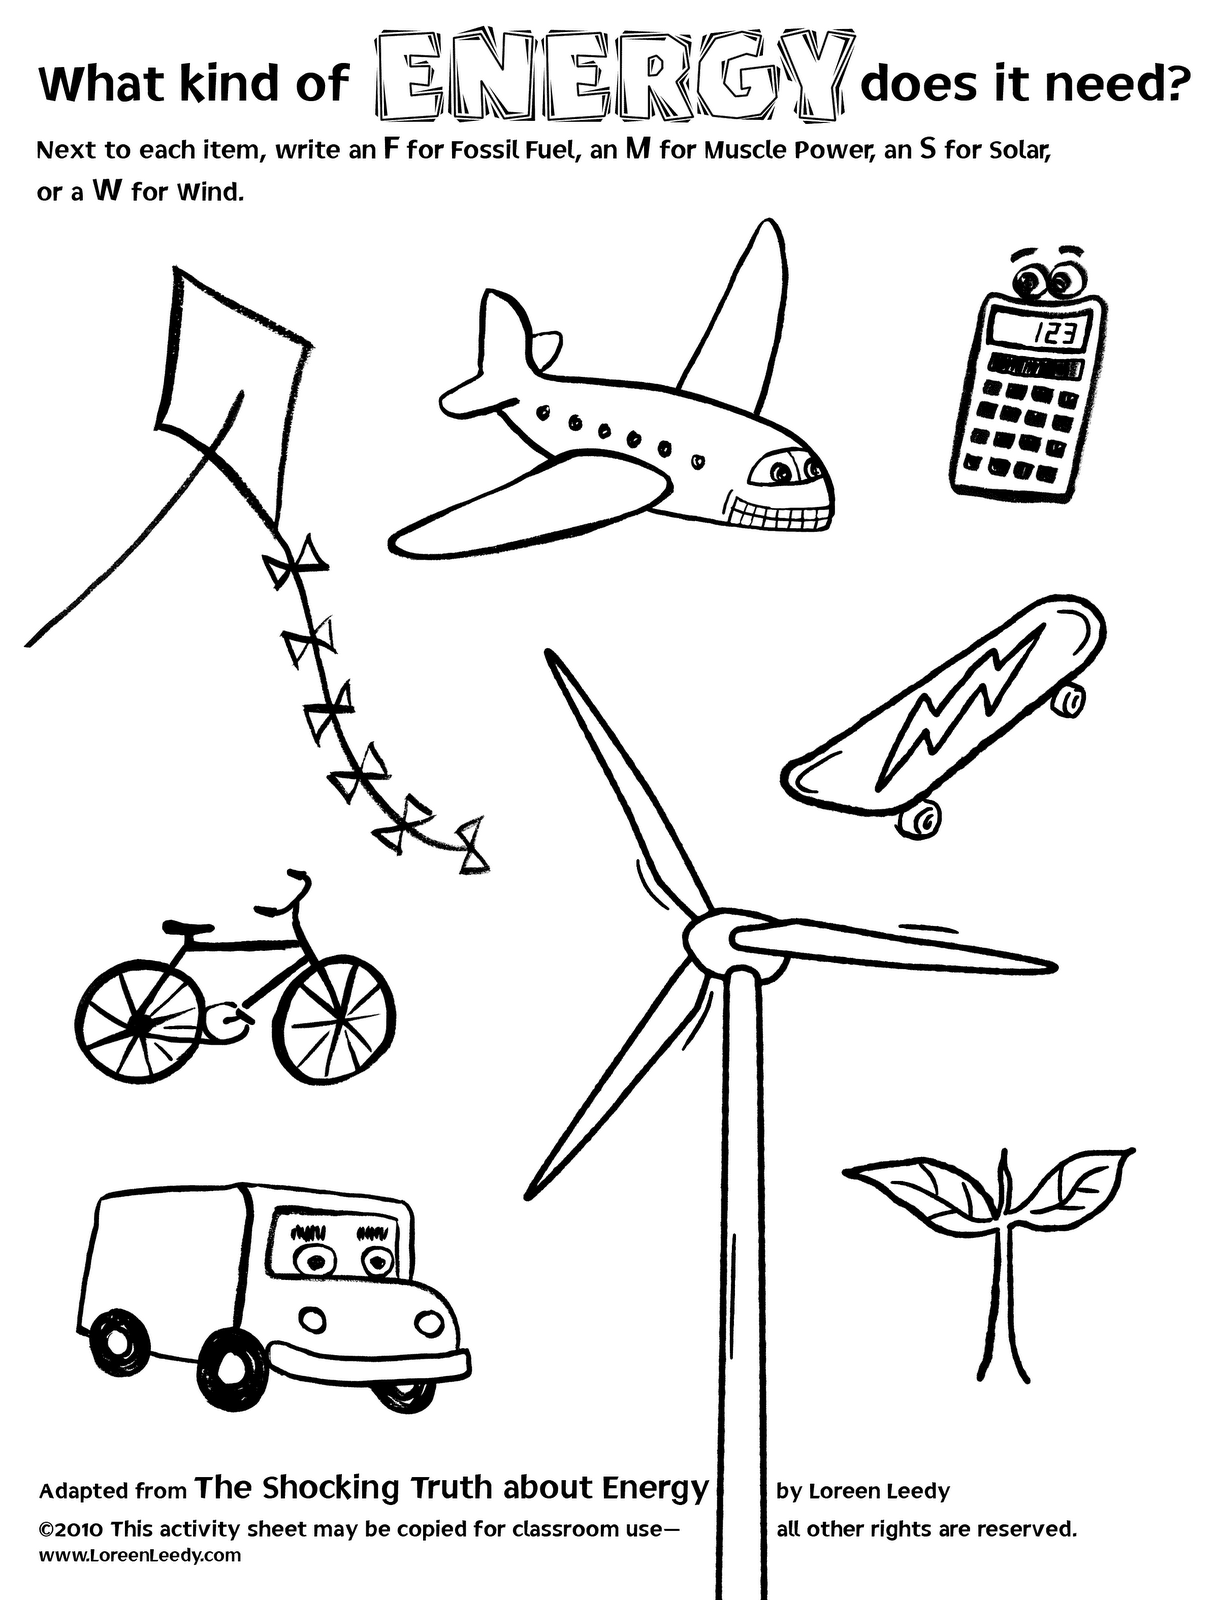 20 Best Images of Mechanical Energy Worksheets Elementary - Energy